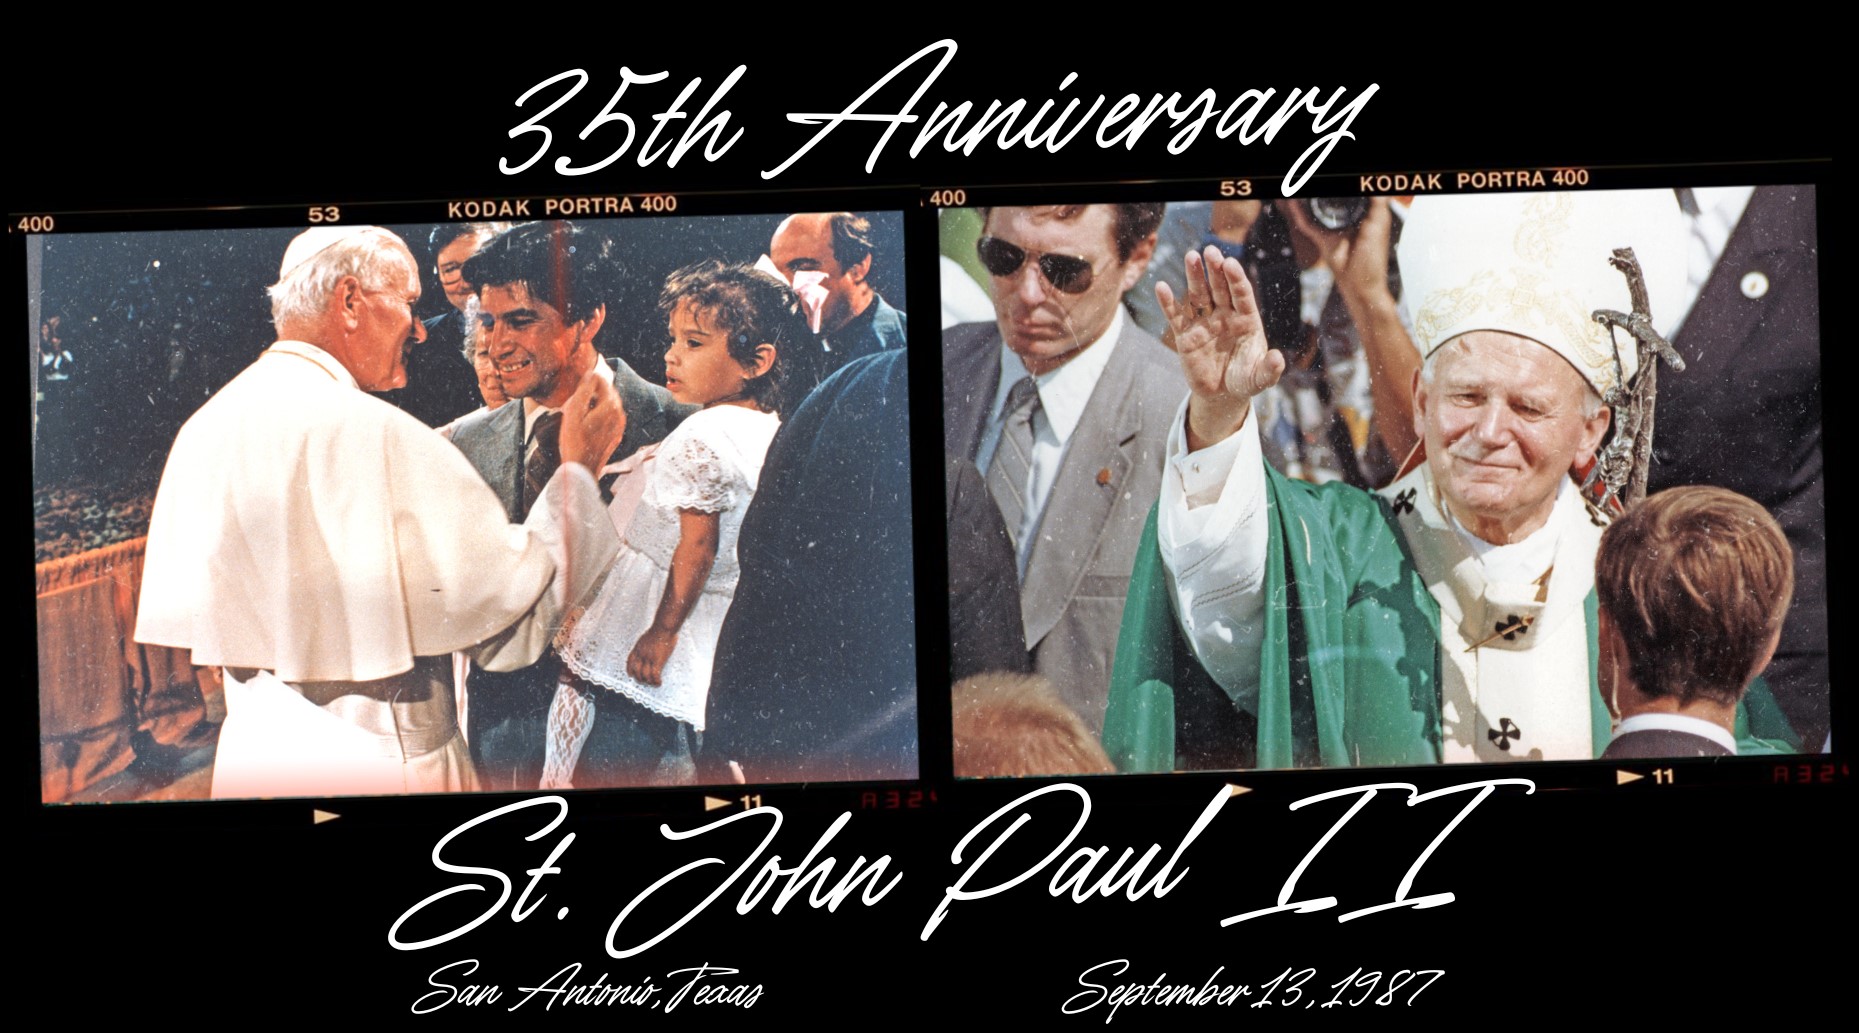 35th Anniversary – St. Paul John Paul II visits San Antonio, TX